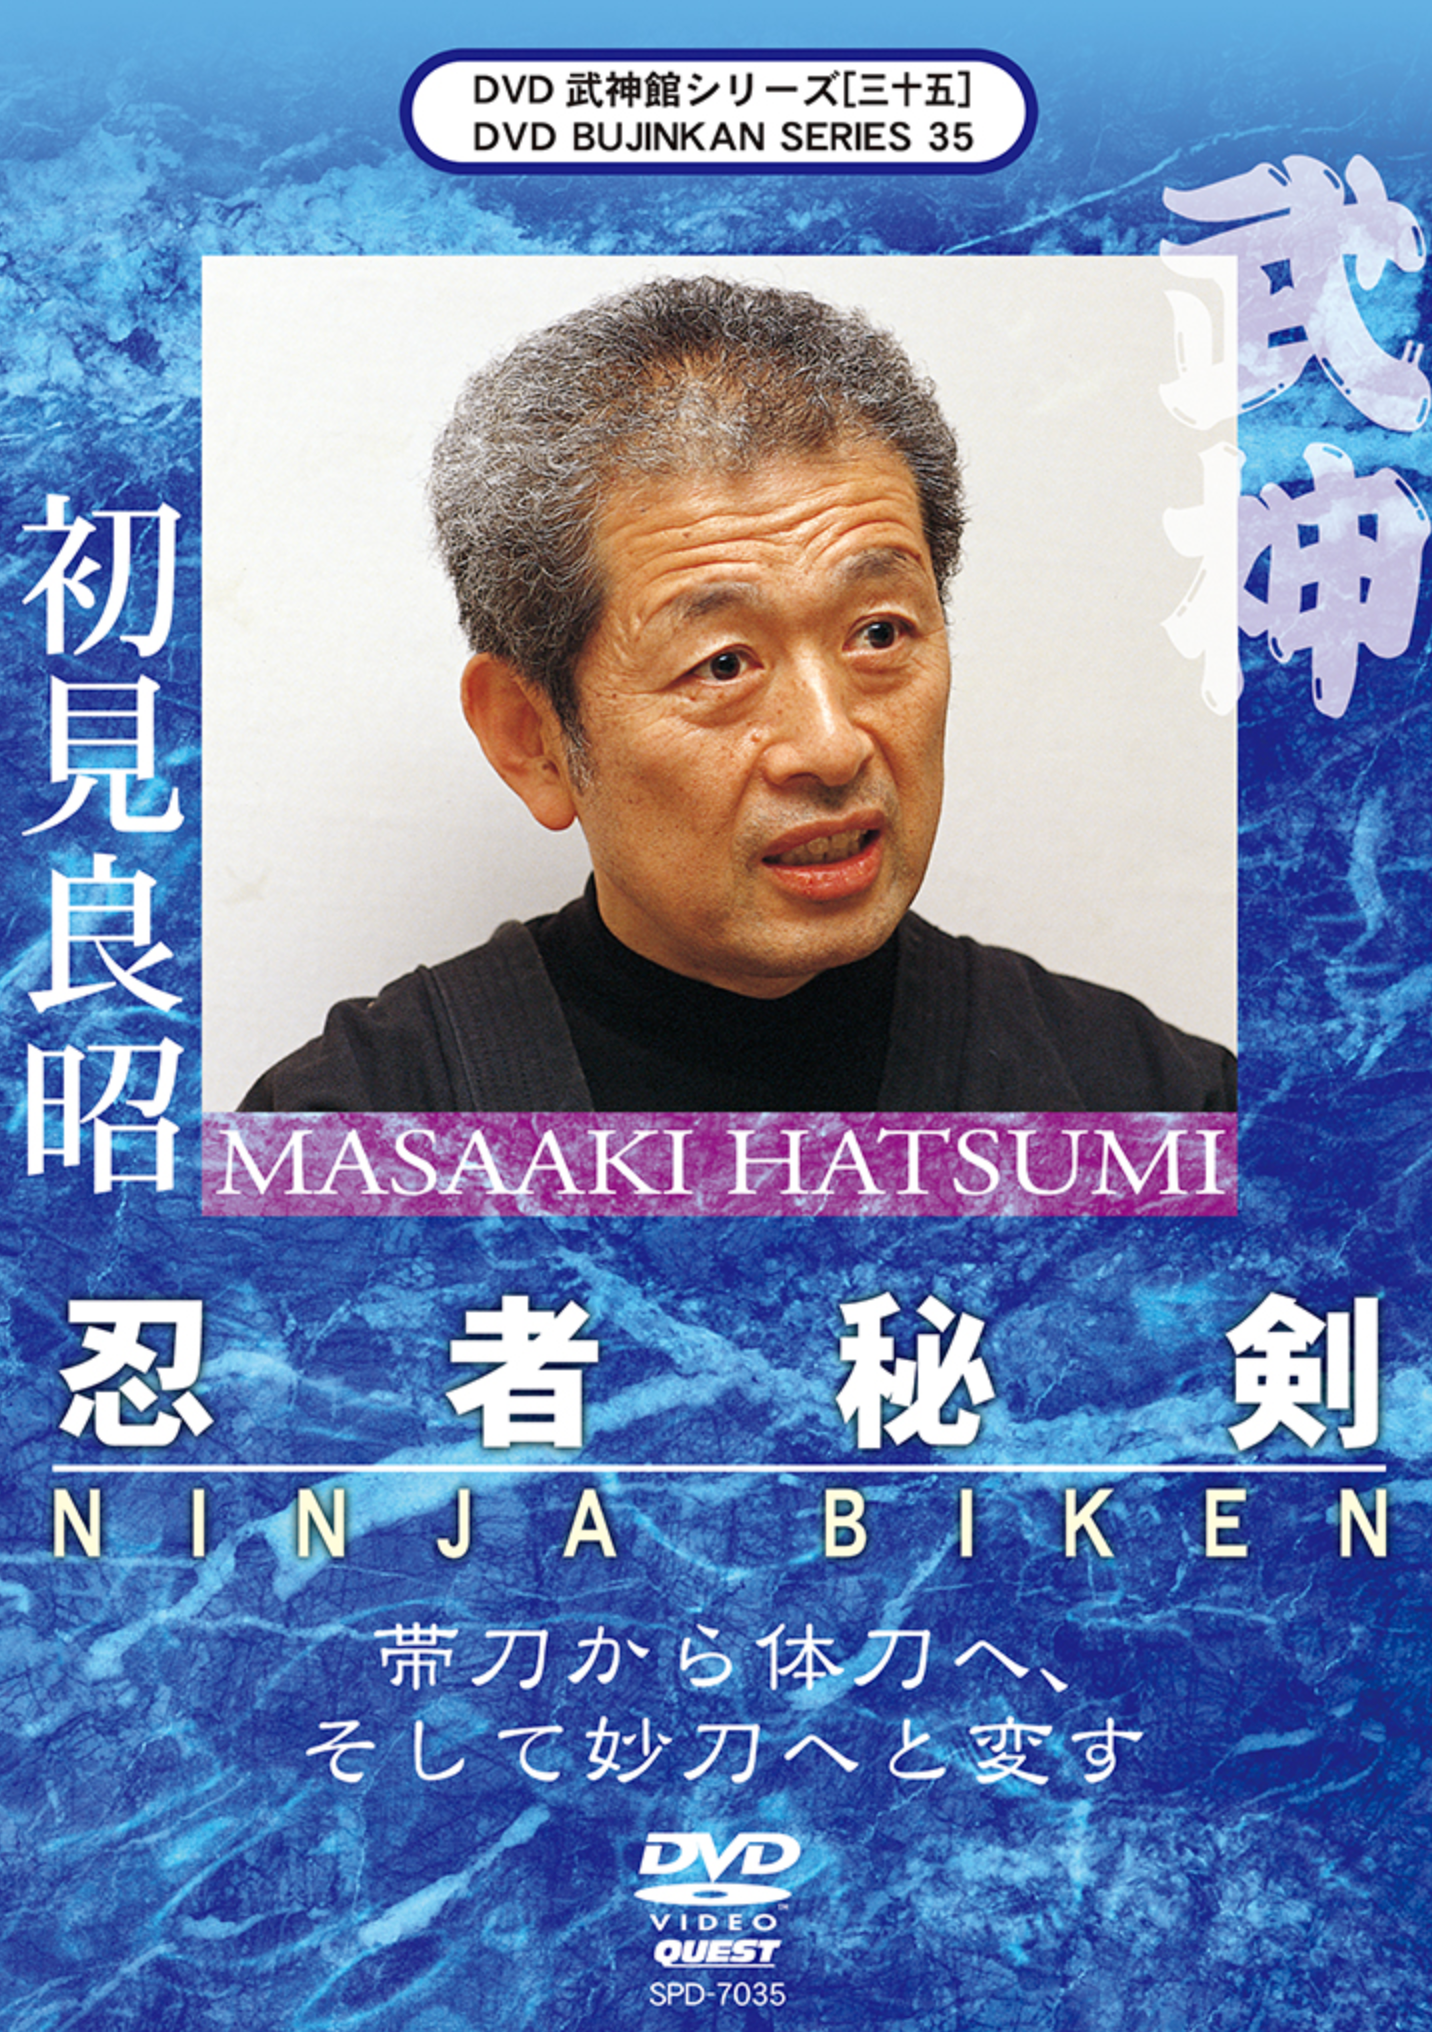 Bujinkan DVD Series 35: Ninja Biken with Masaaki Hatsumi - Budovideos Inc